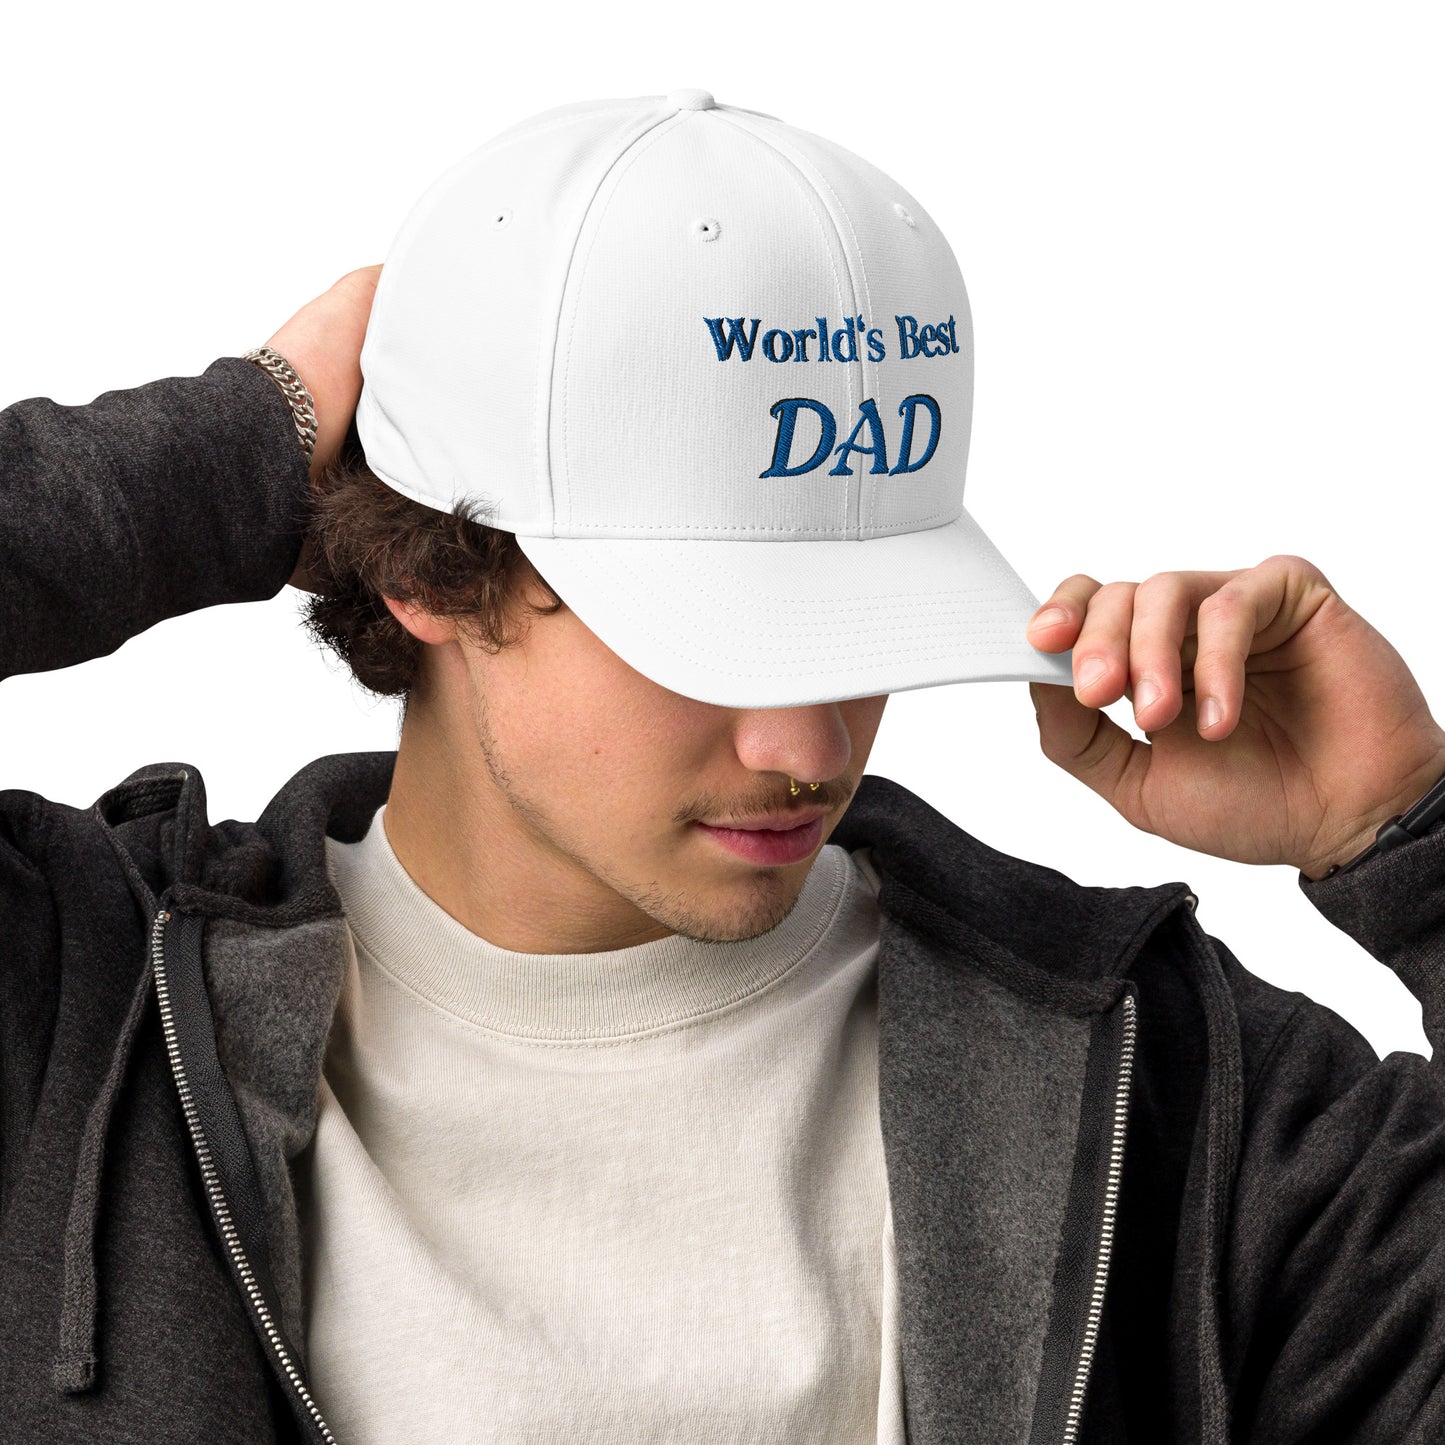 Adidas "World's best Dad" Performance Cap